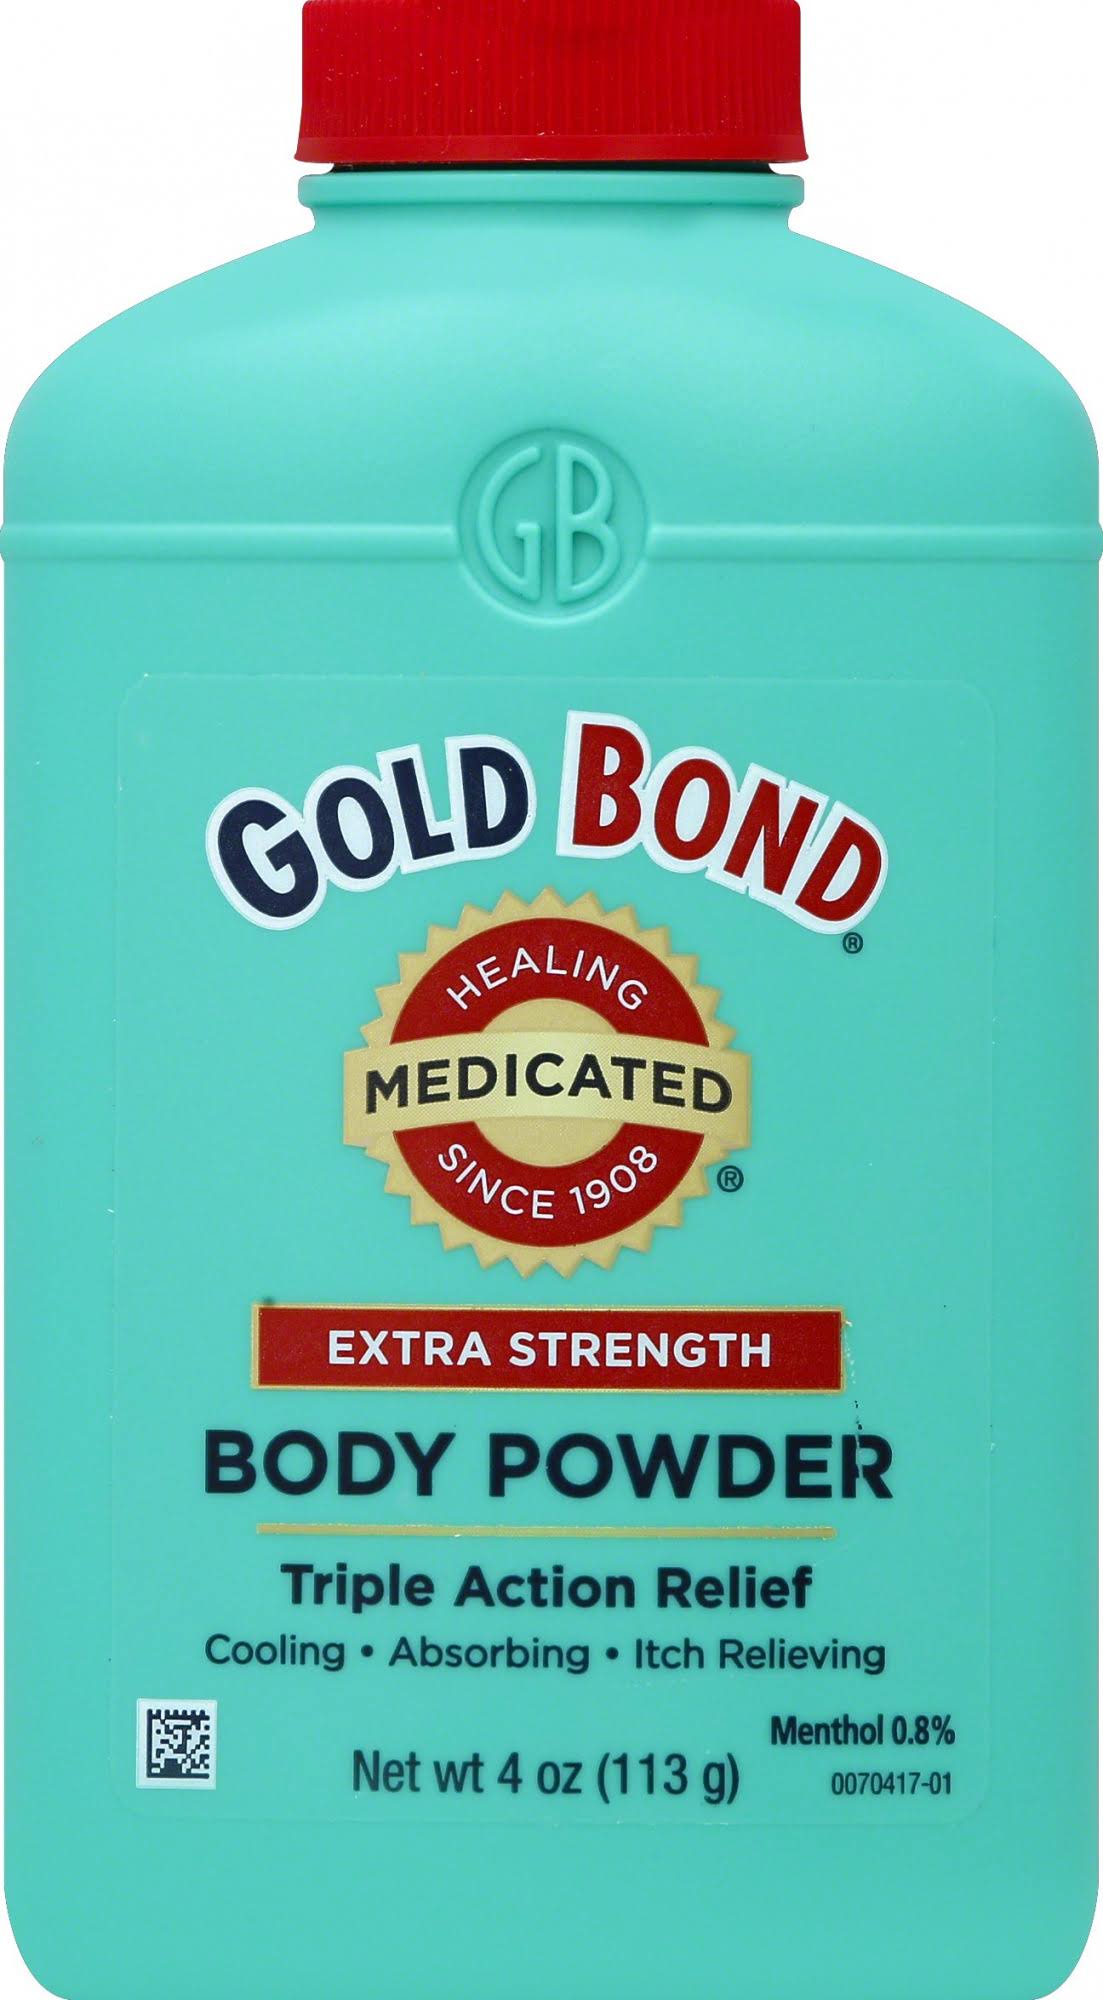 Gold Bond Medicated Body Powder - Extra Strength, 4oz